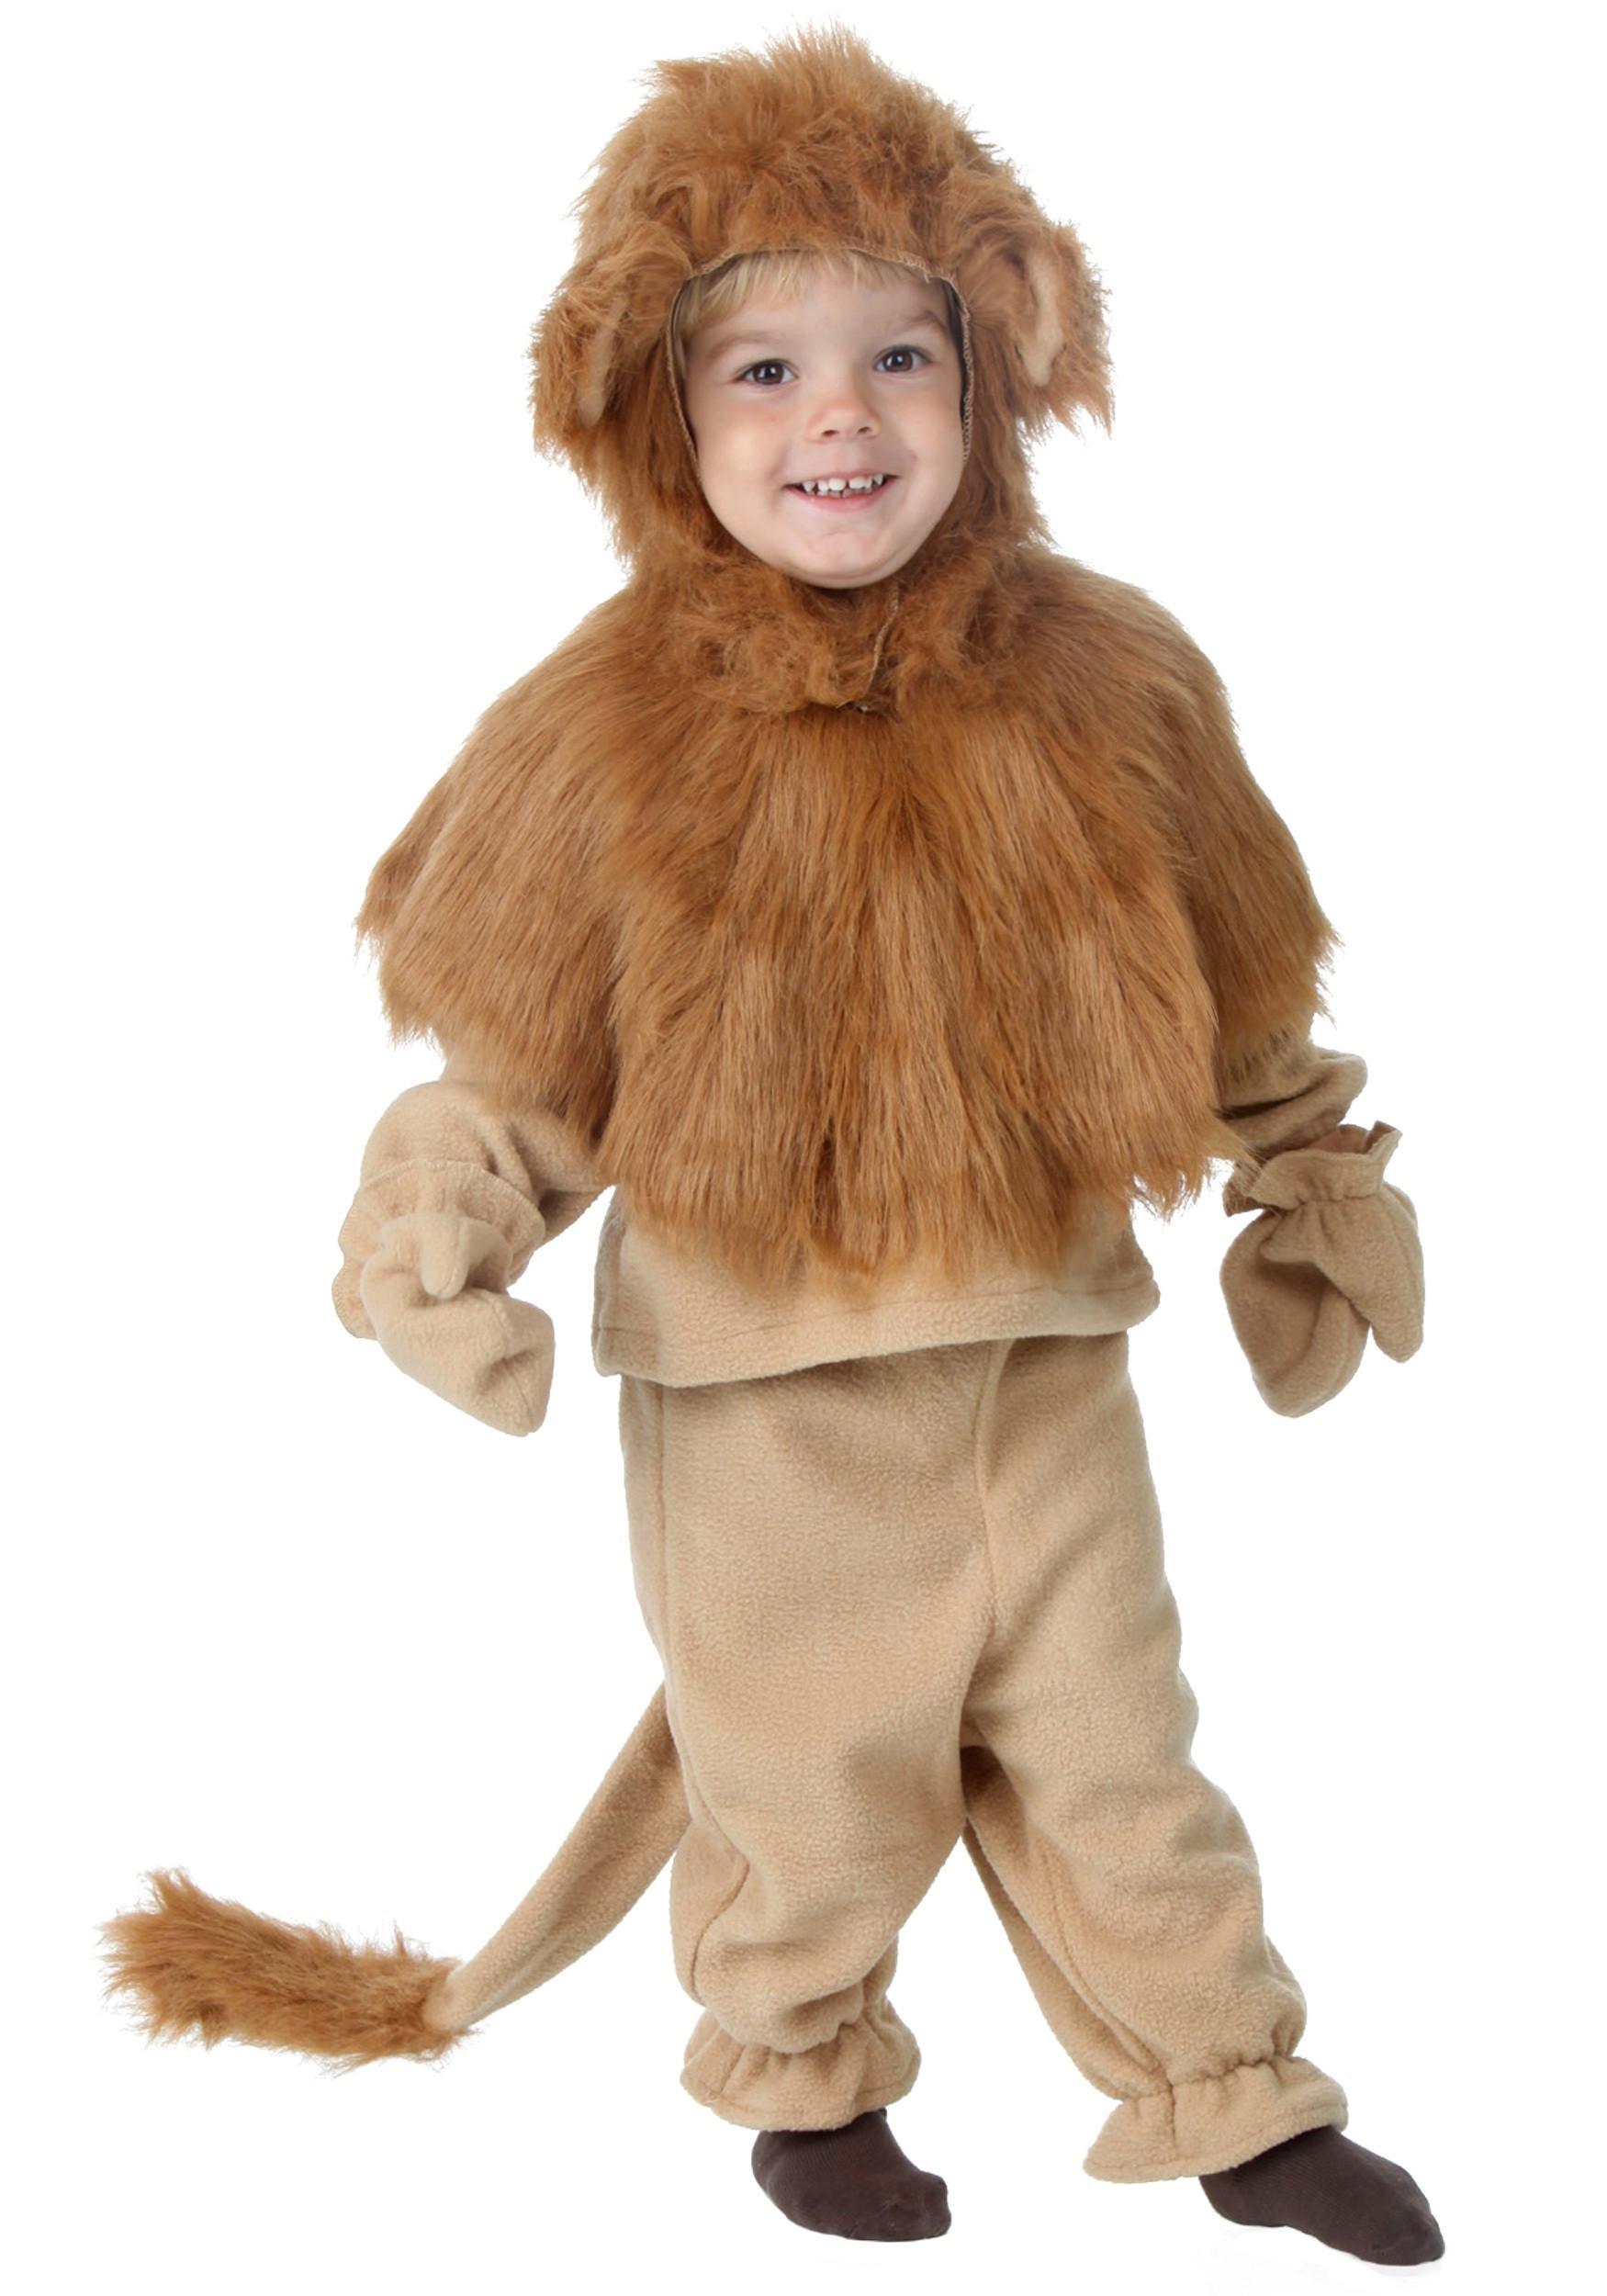 DIY Kids Lion Costume
 Homemade Lion Costume For Kids